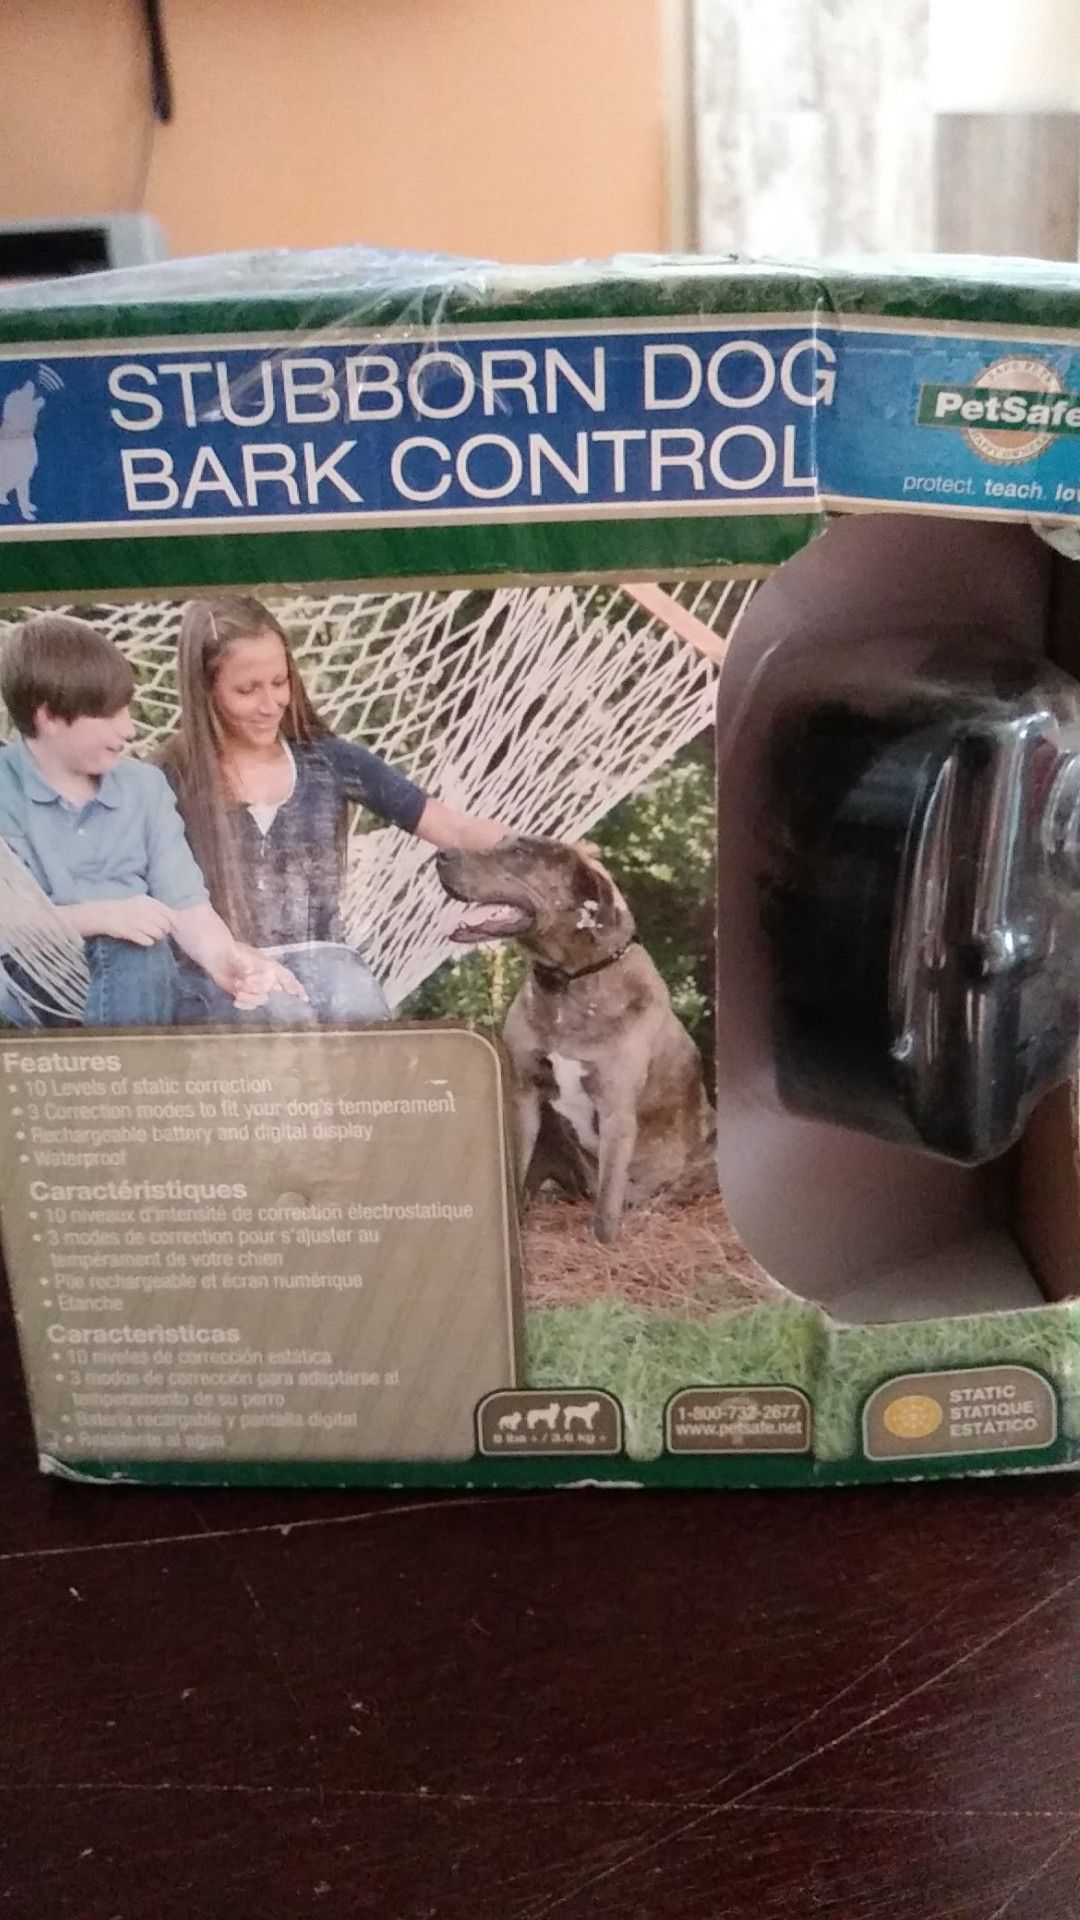 Dog bark control collar